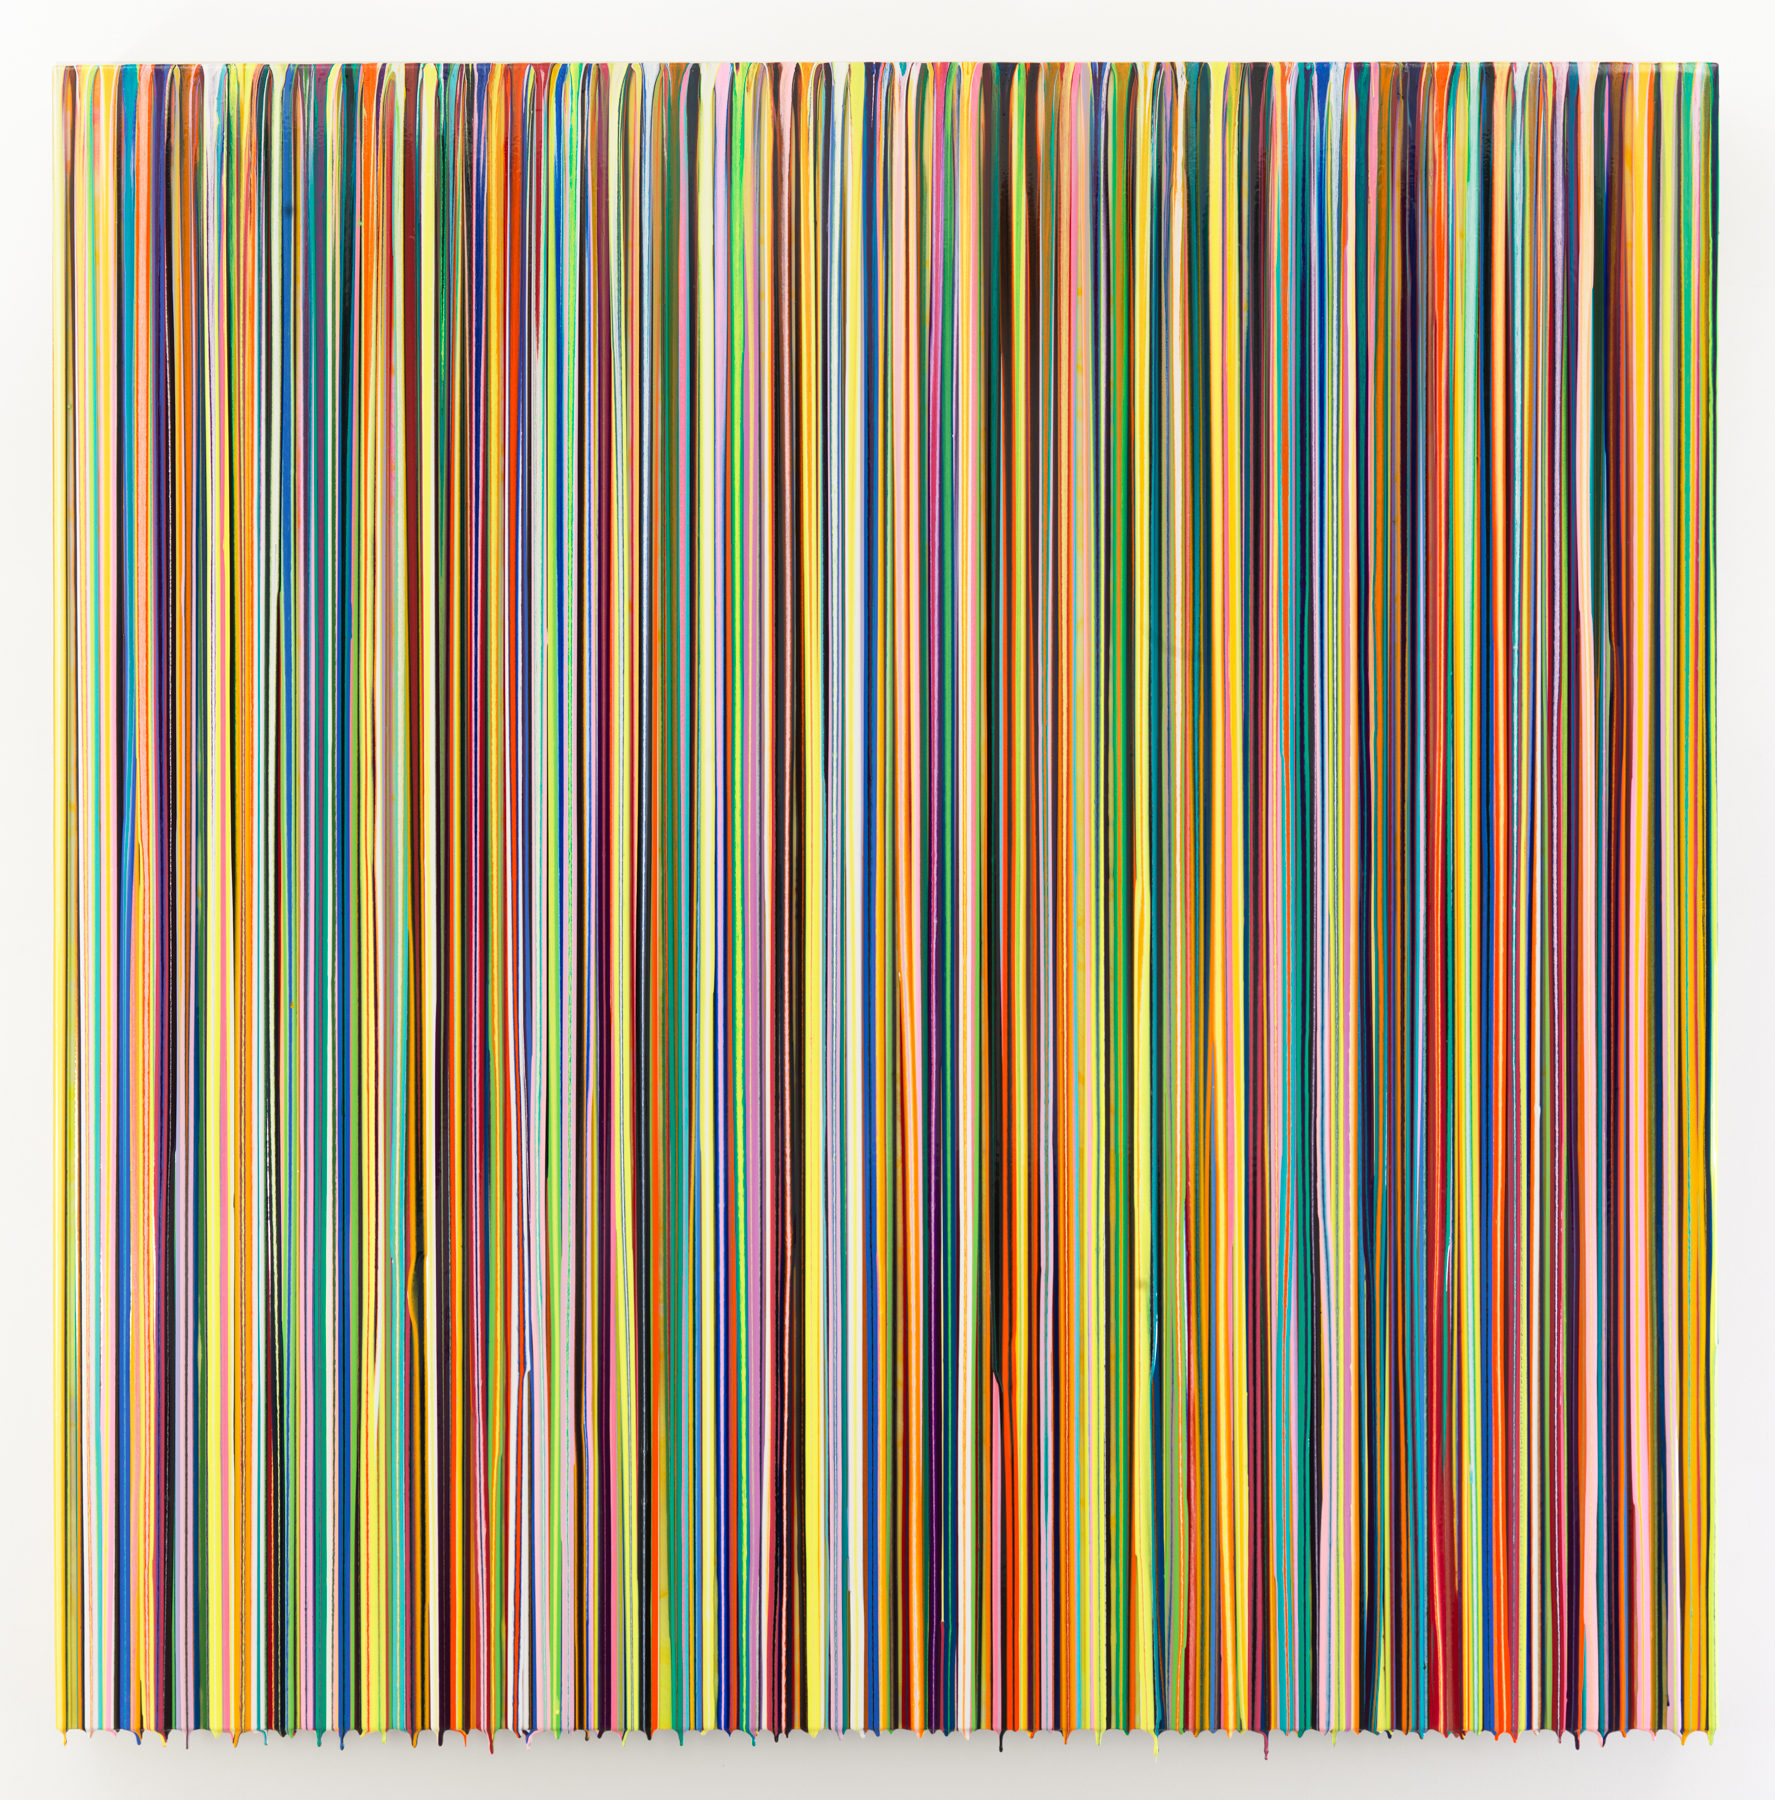 I&#039;VEBEENWAITINGFORAGUIDETOTAKEMEBYTHEHAND, 2015, Epoxy resin and pigments on wood, 60 x 60 inches, 152.4 x 152.4 cm, AMY#27947